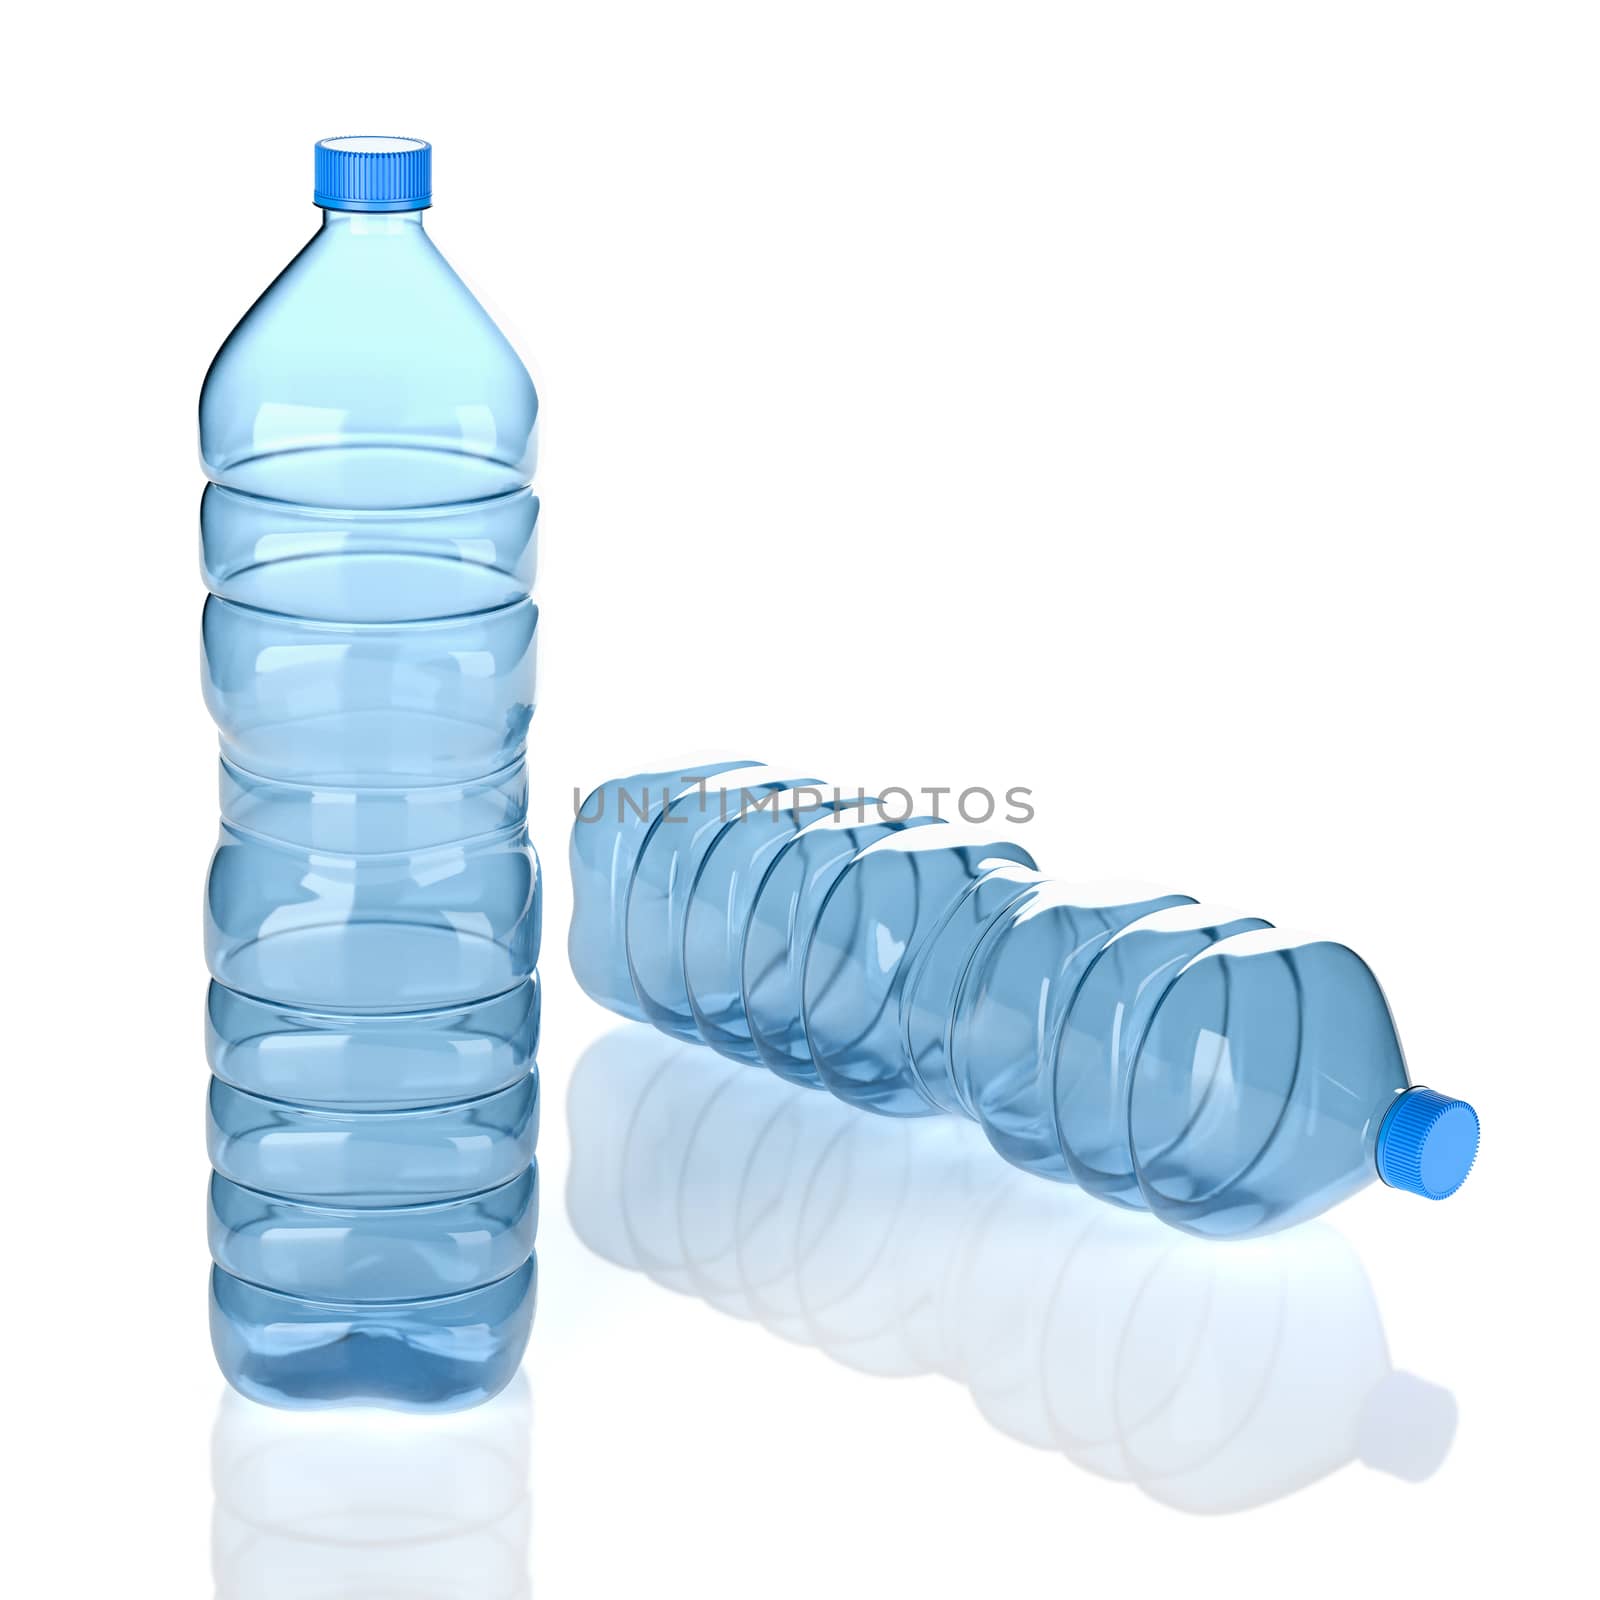 Empty Plastic Bottles by make